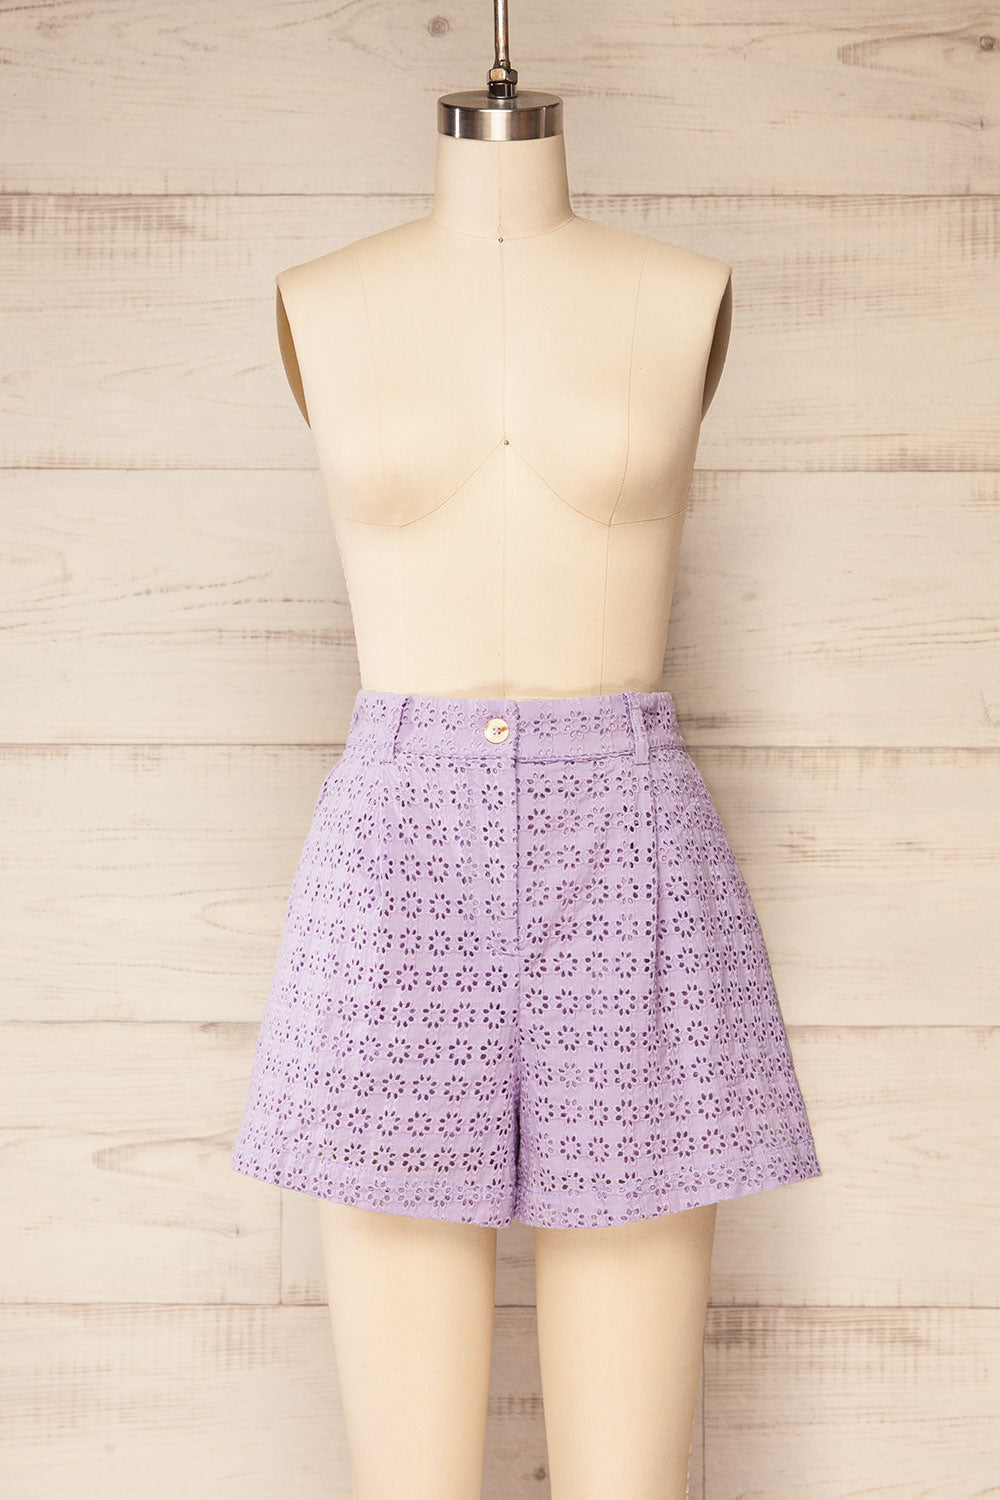 Mobberley Lilac High-Waisted Shorts w/ Openwork | La petite garçonne front view